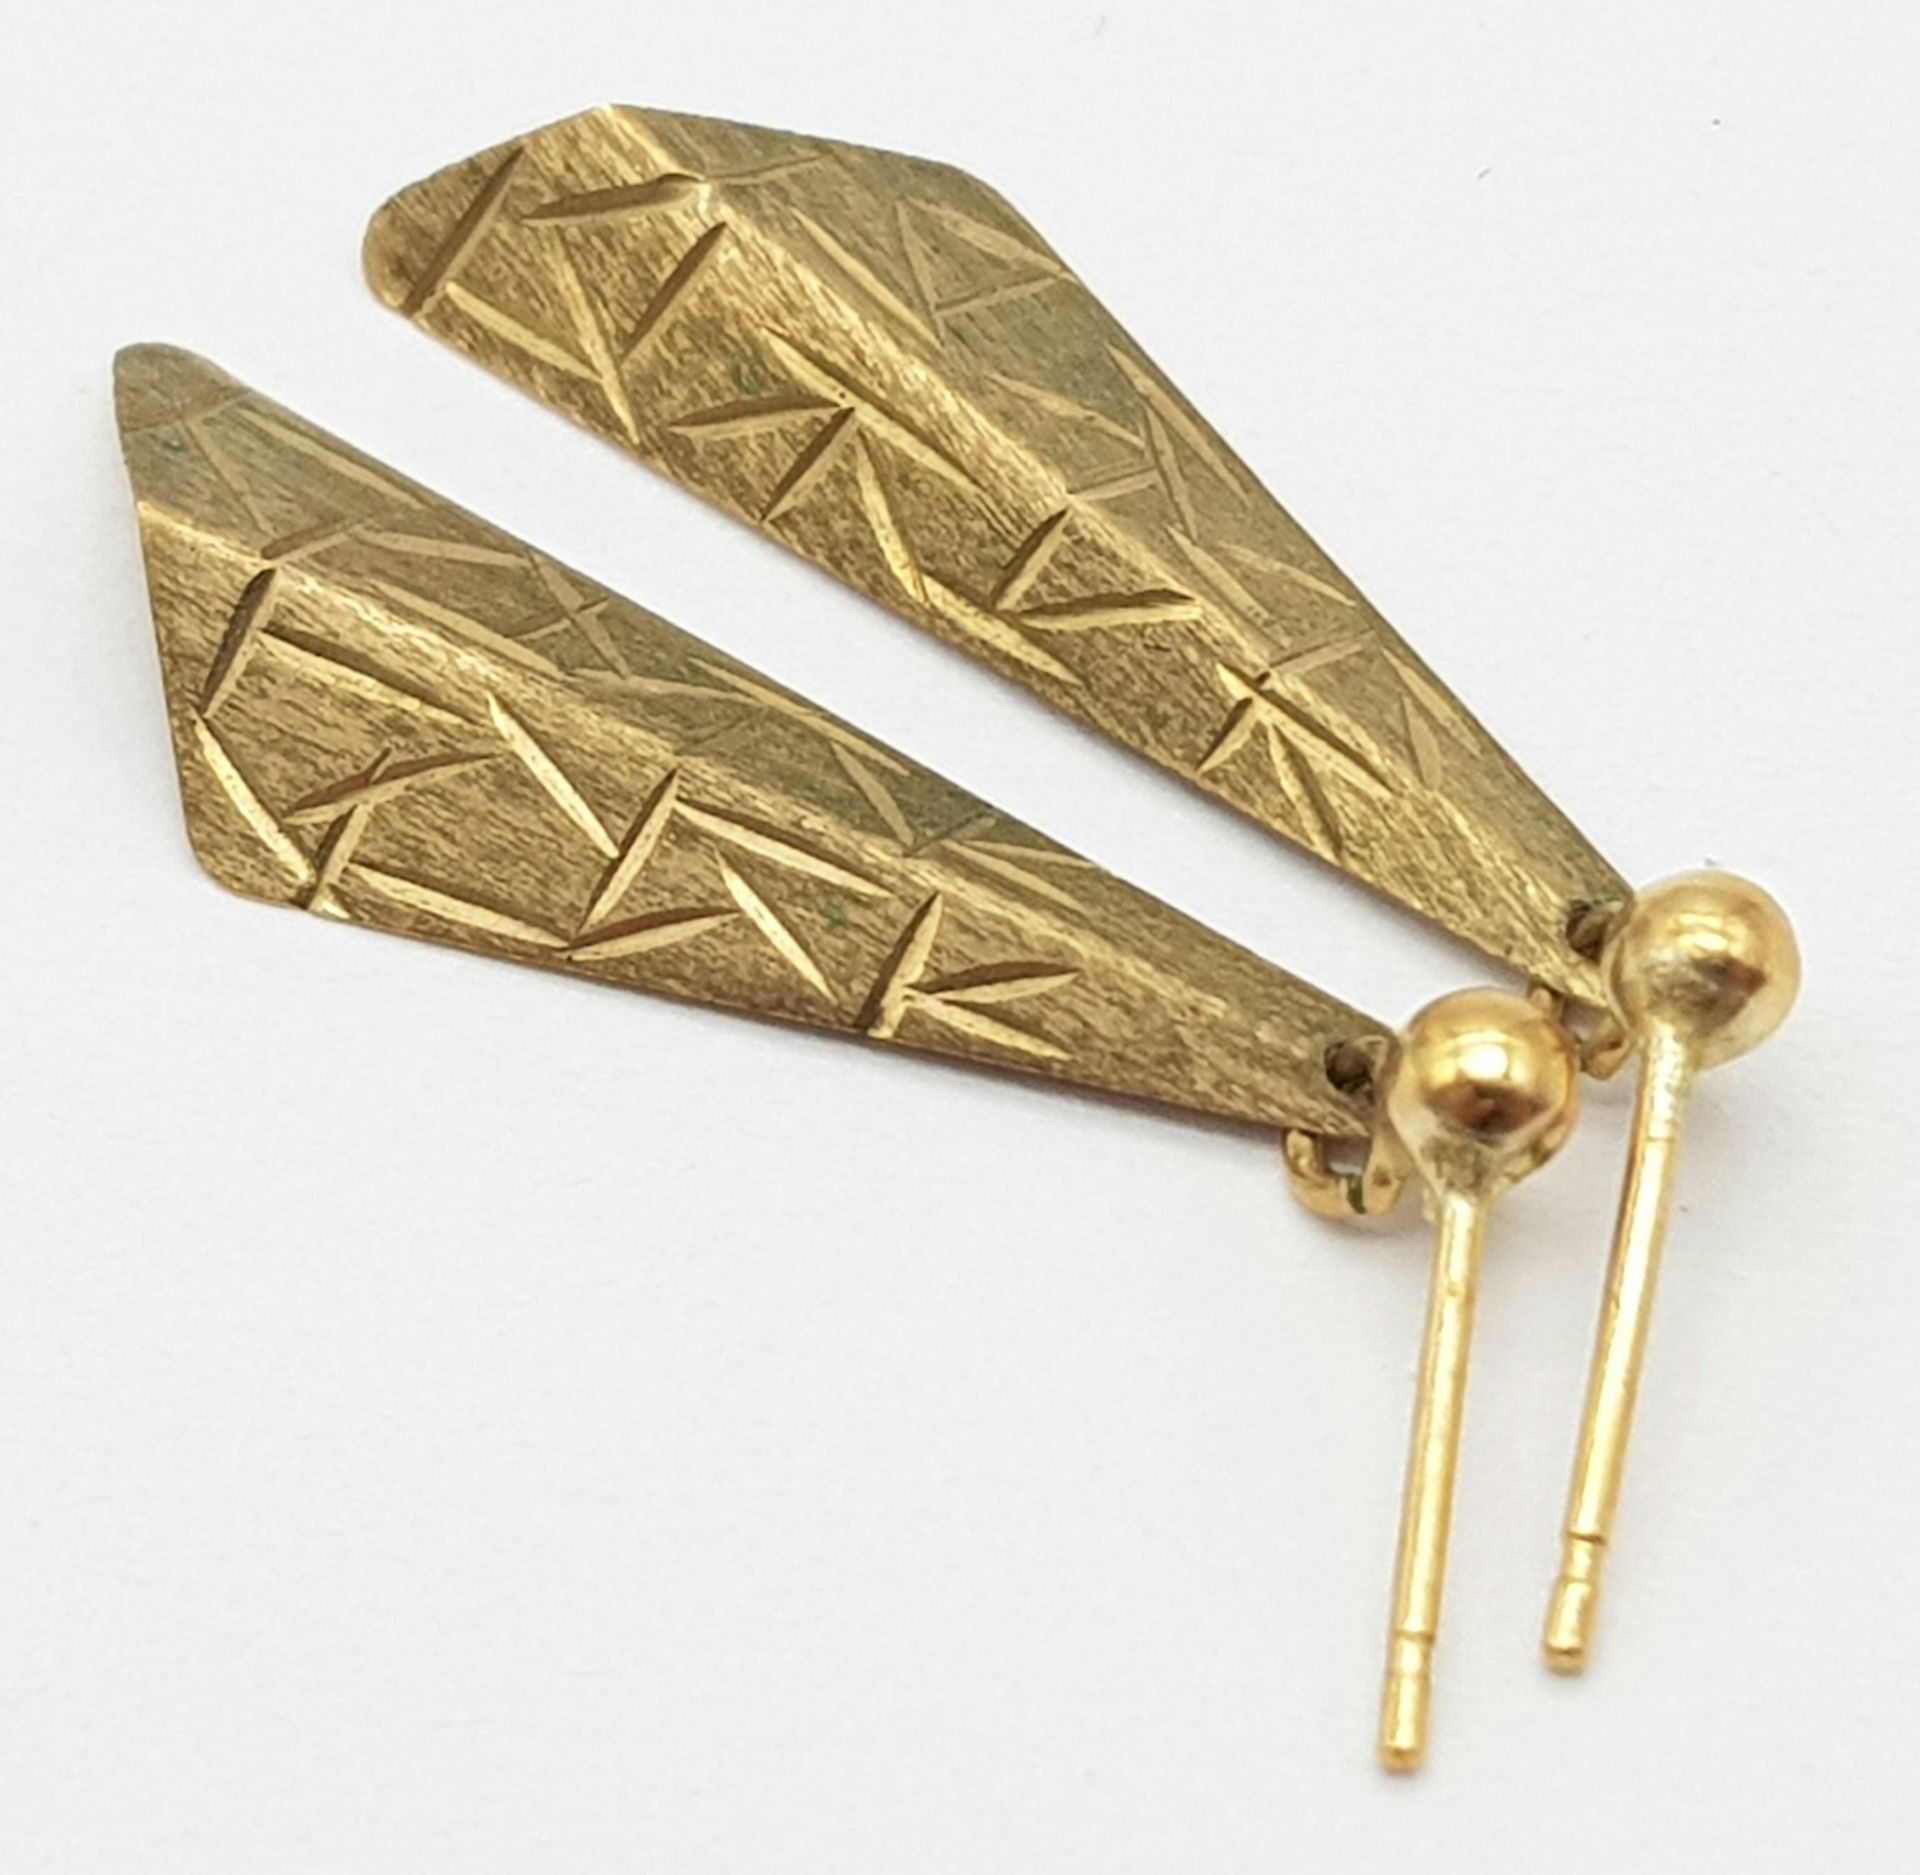 A Pair of Vintage 9K Gold Kite Earrings. 2.5cm. No backs. 0.9g.